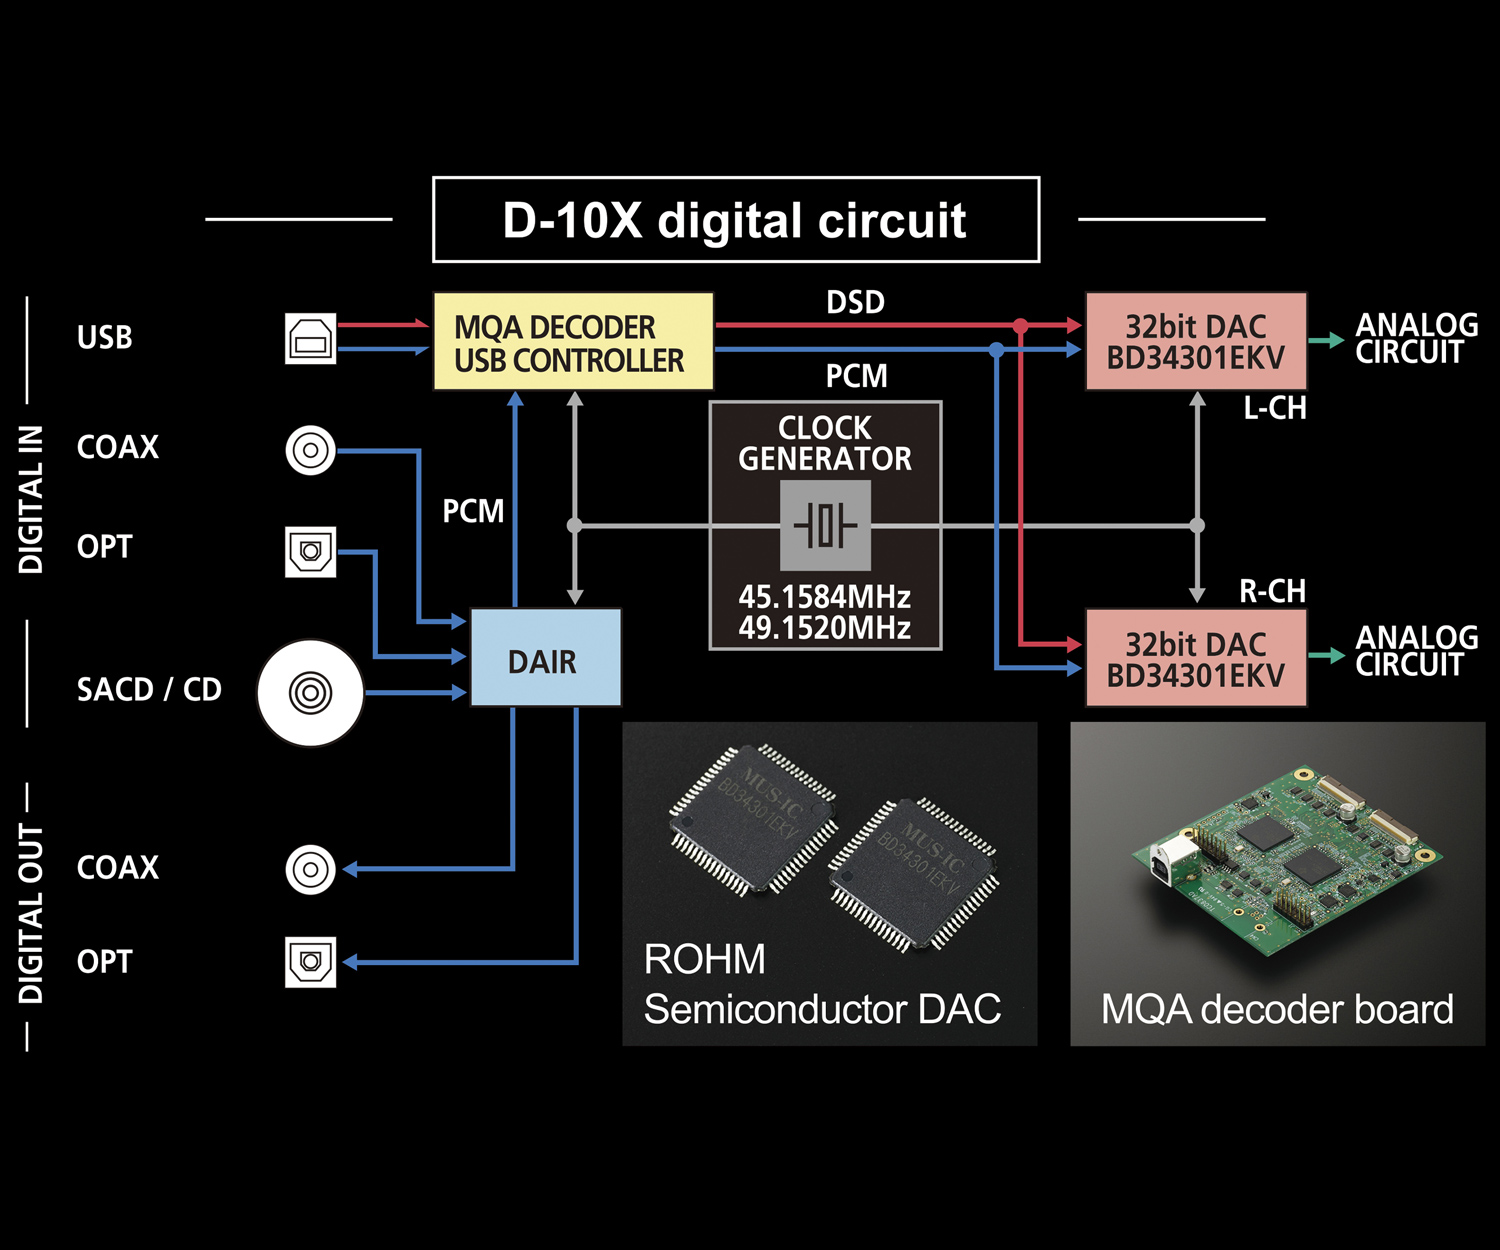 D-10X digital circuit